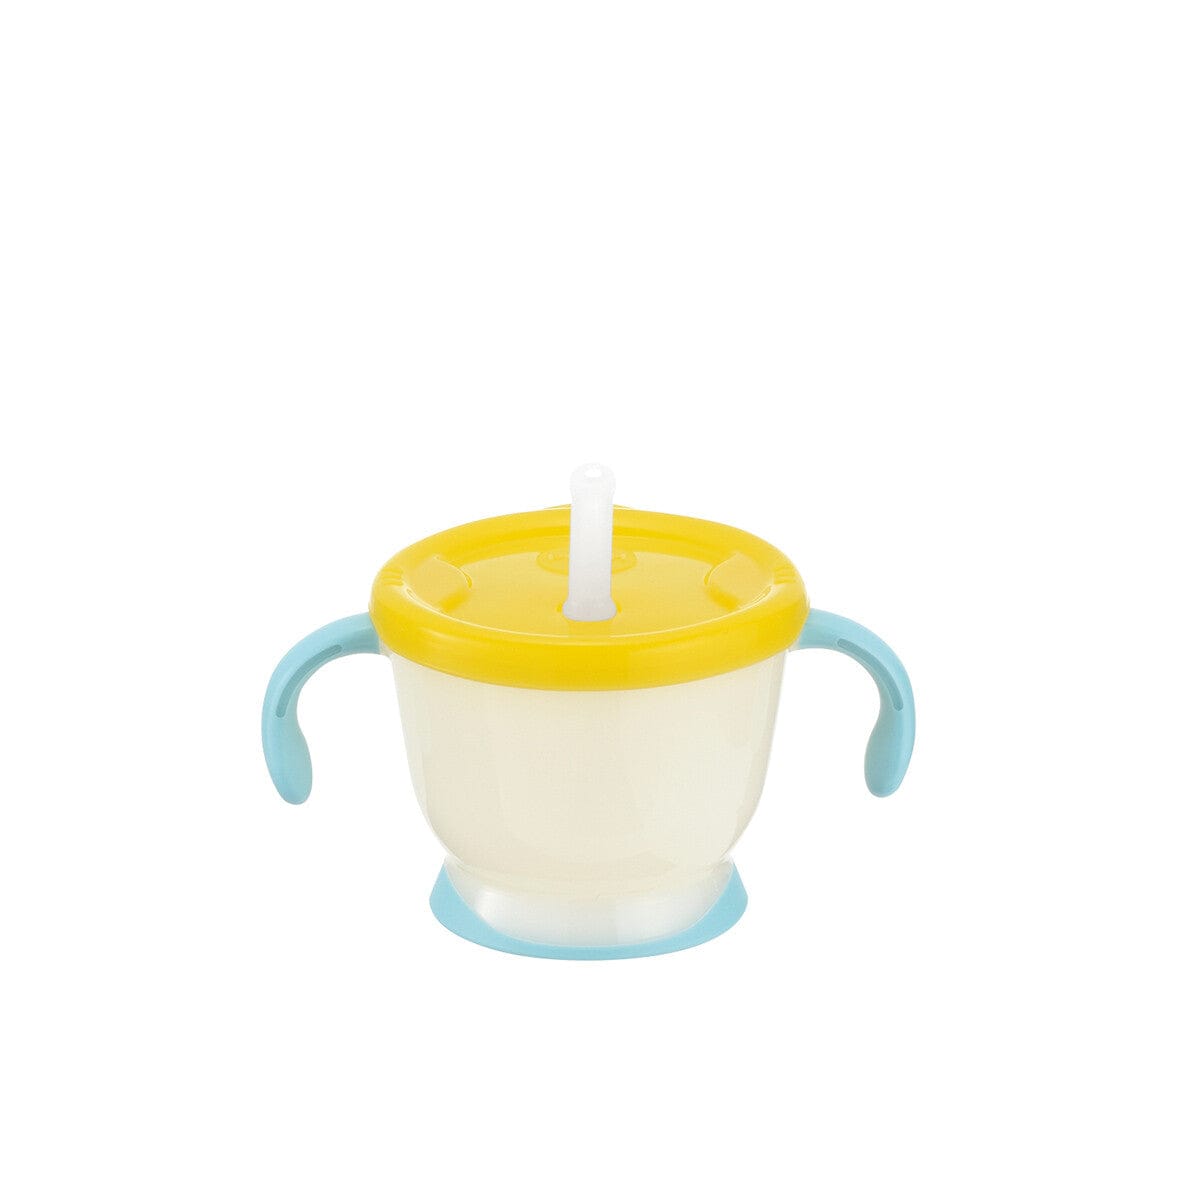 Richell - Aqulea Sippy Straw Baby Training Cup Mug - Yellow Baby Cup 4973655220122 Durio.sg